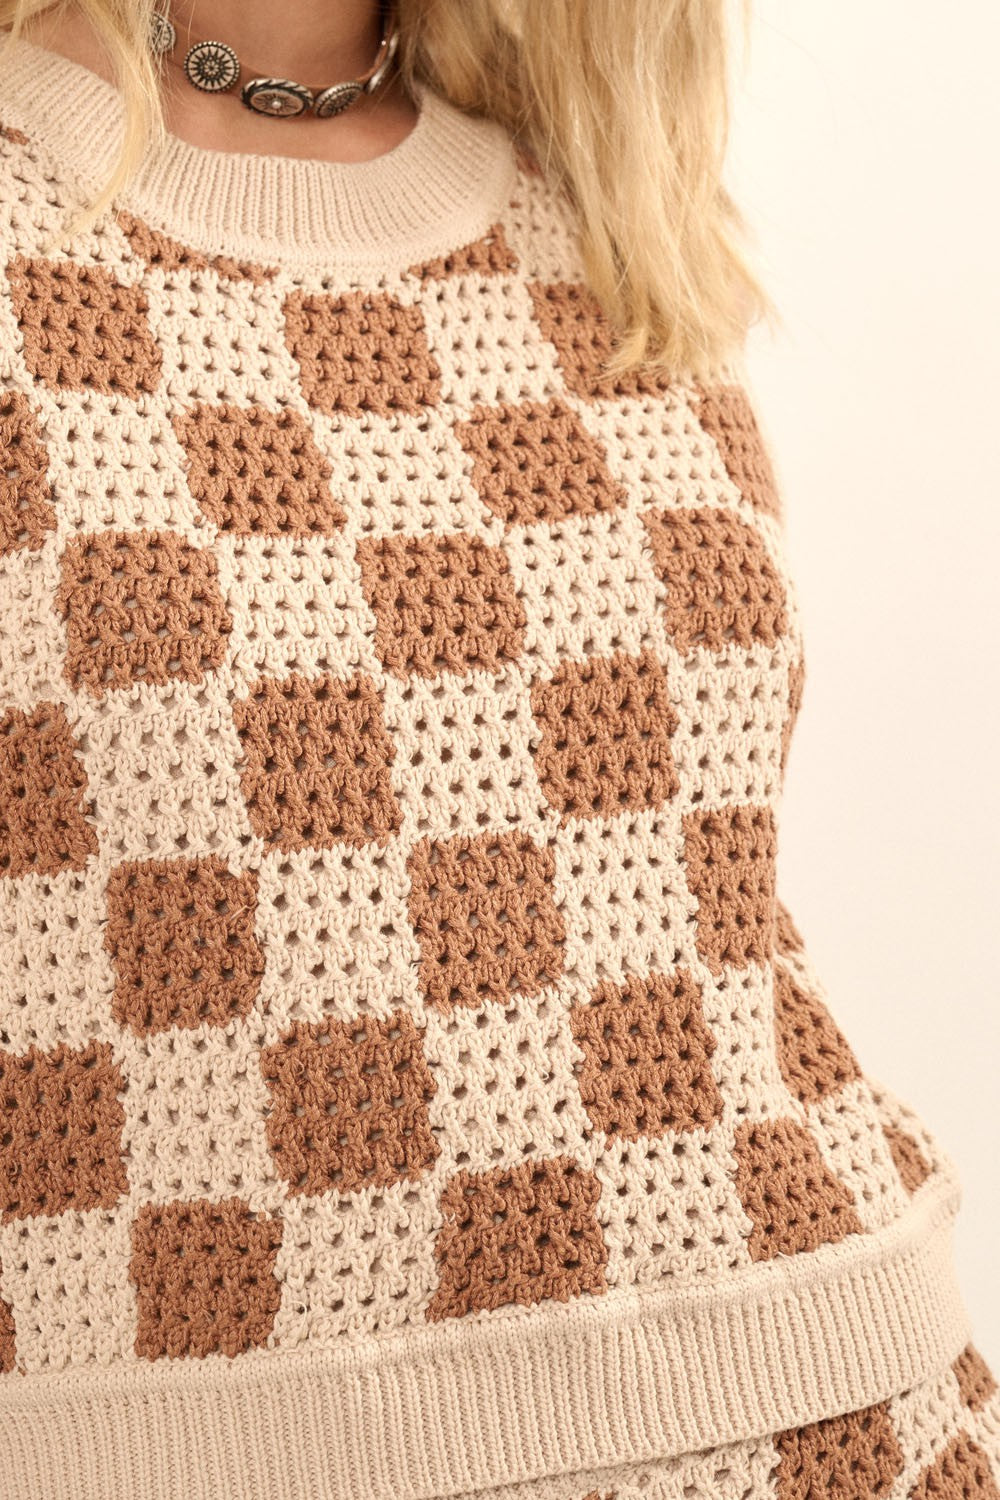 The Addison Crochet Top + Mini Skirt Set - Sold Separately